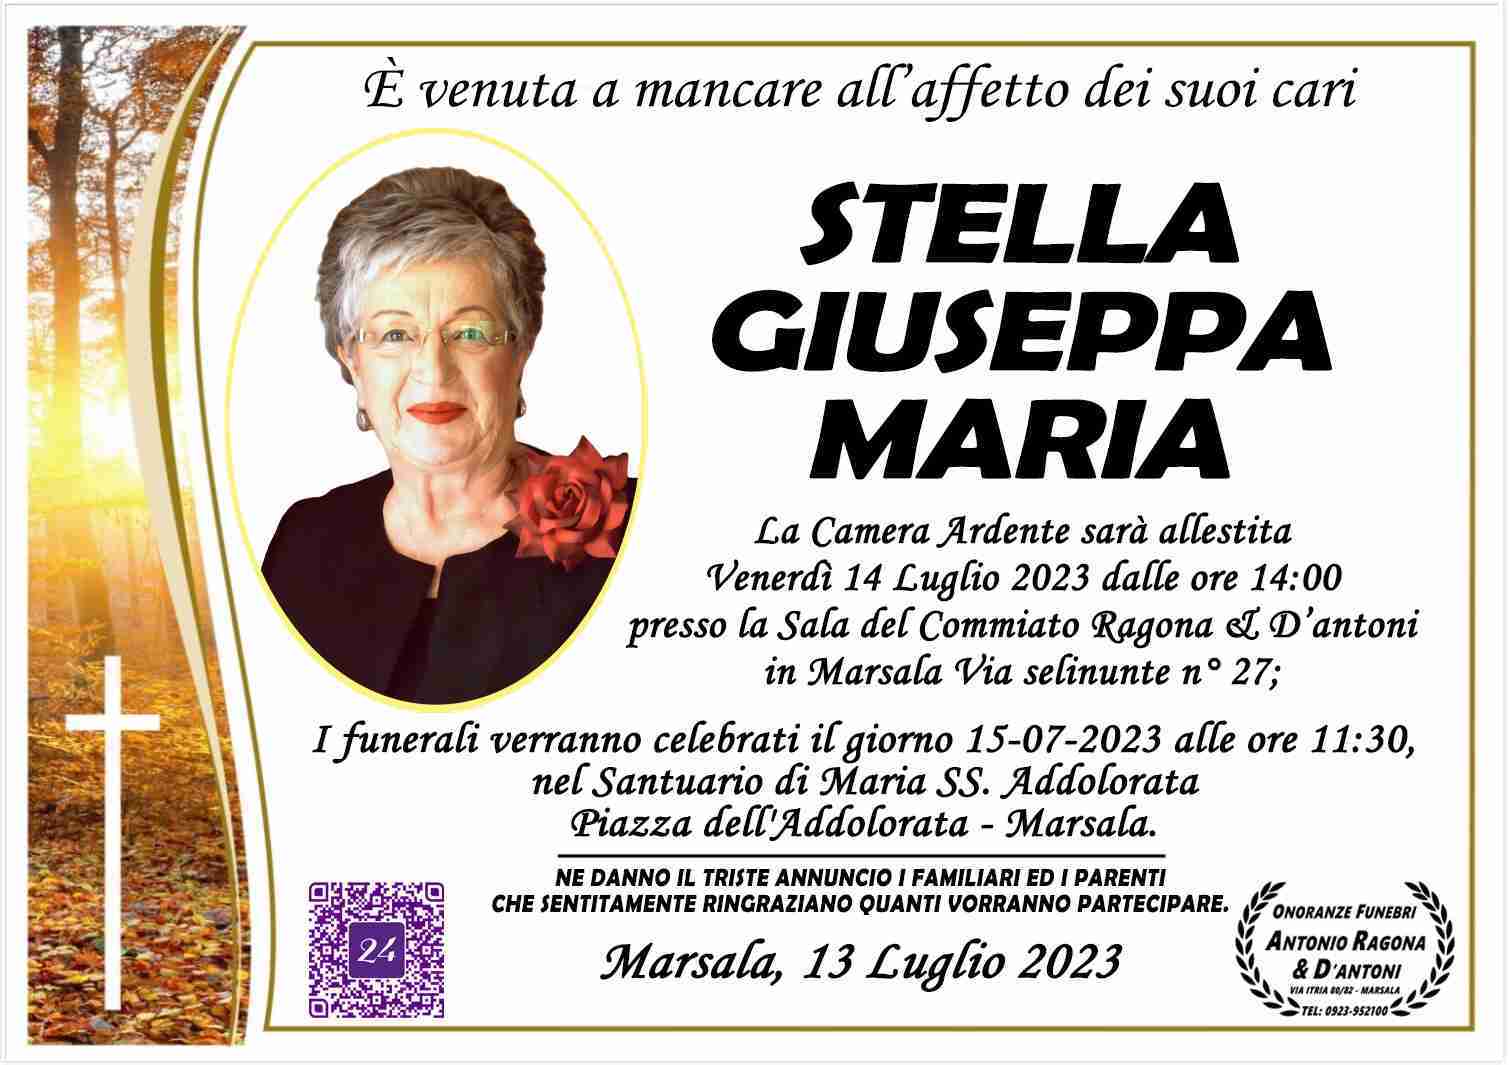 Giuseppa Maria Stella